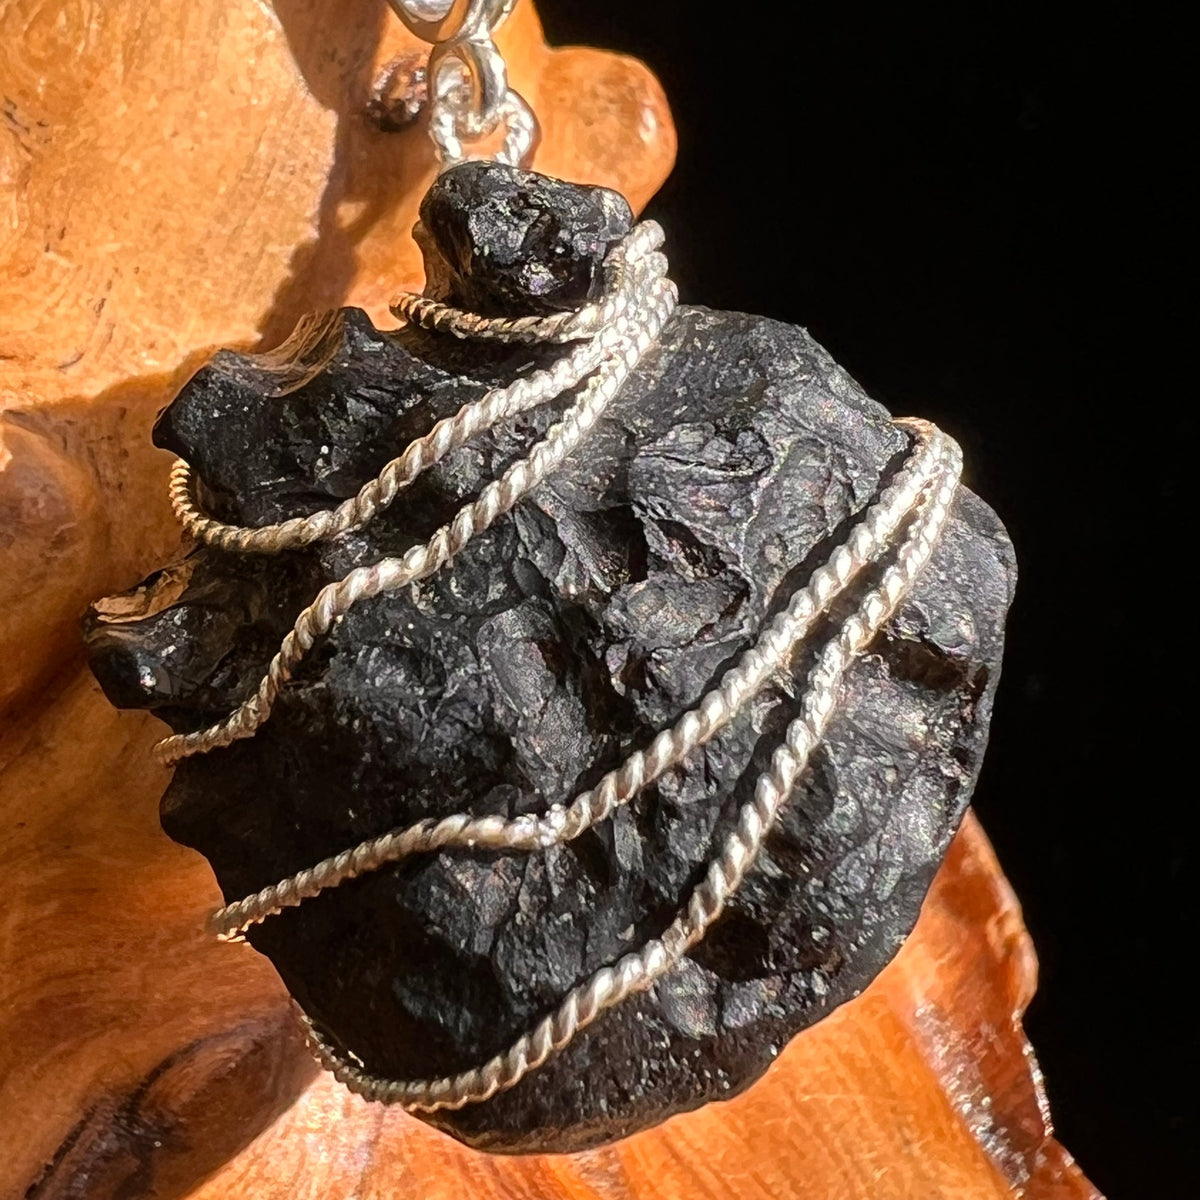 Billitonite Pendant Sterling Silver Wire Wrapped #5838-Moldavite Life